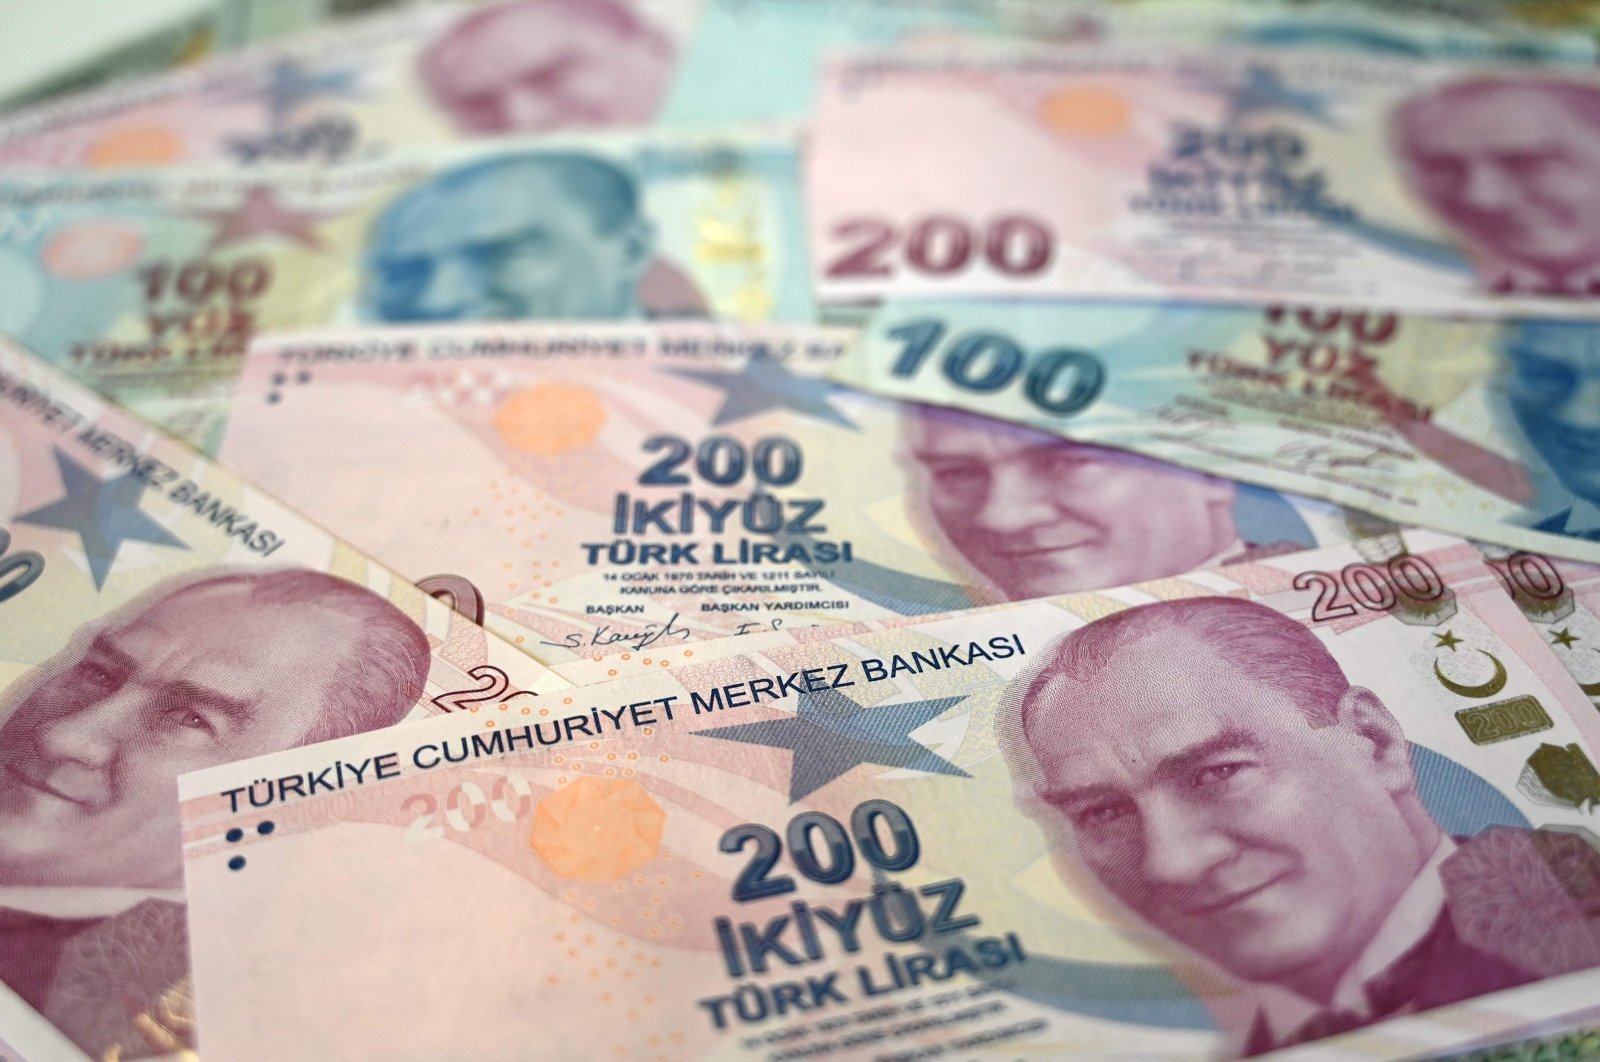 Bank sentral Turki menjual ,12 miliar pada intervensi pasar 13 Desember